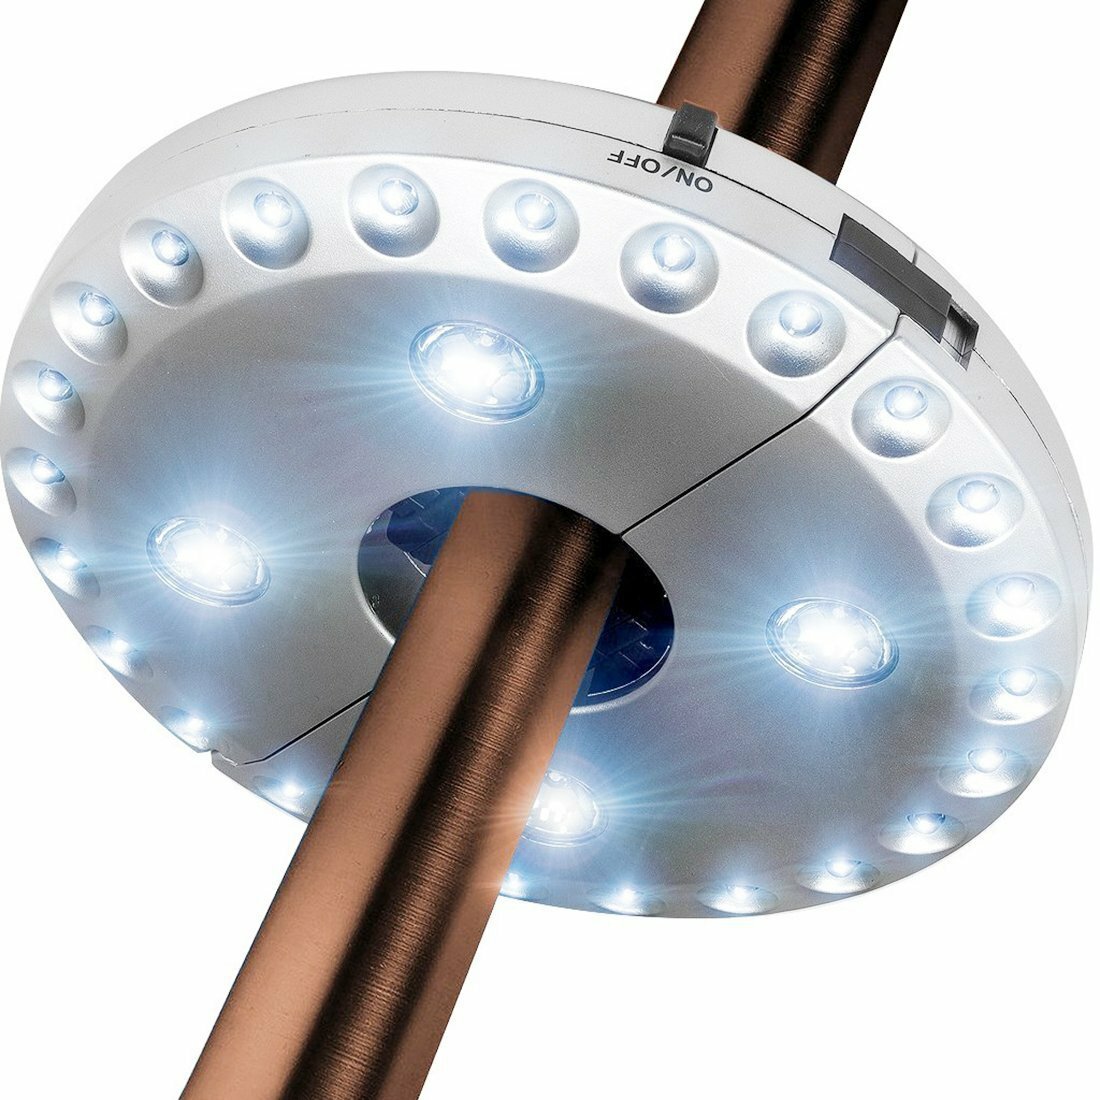 

Patio Umbrella Light Battery Powered Led Umbrella Pole Light with 3 Brightness Modes Cordless 28 LED Lights for Patio Um